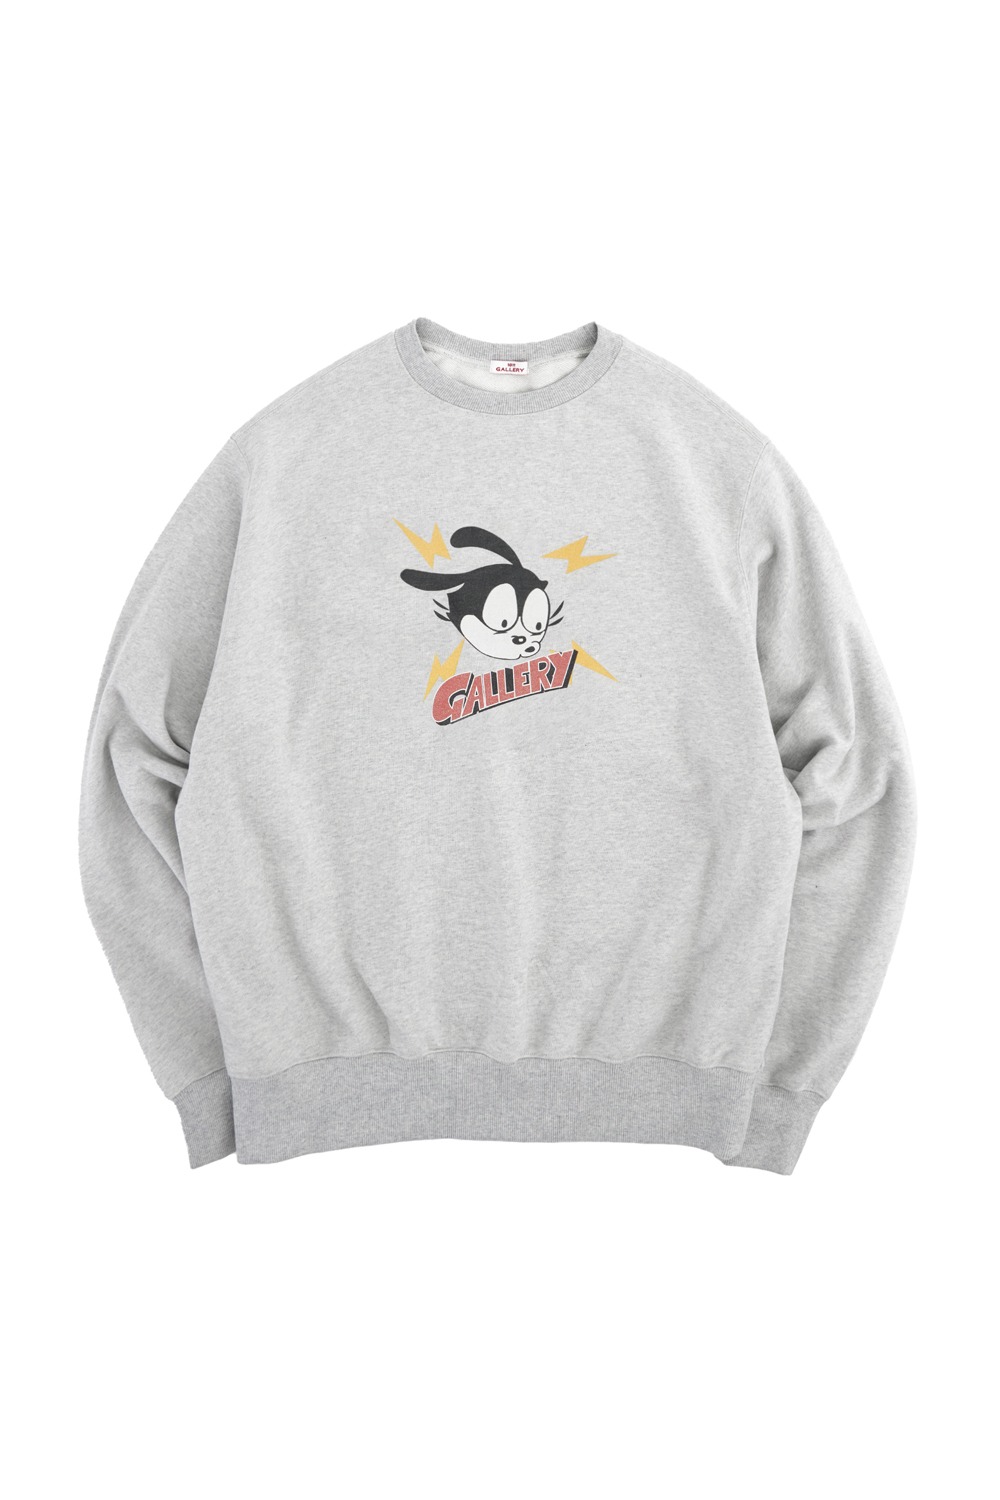 Gallery Rabbit Graphic Sweatshirt - Light Grey